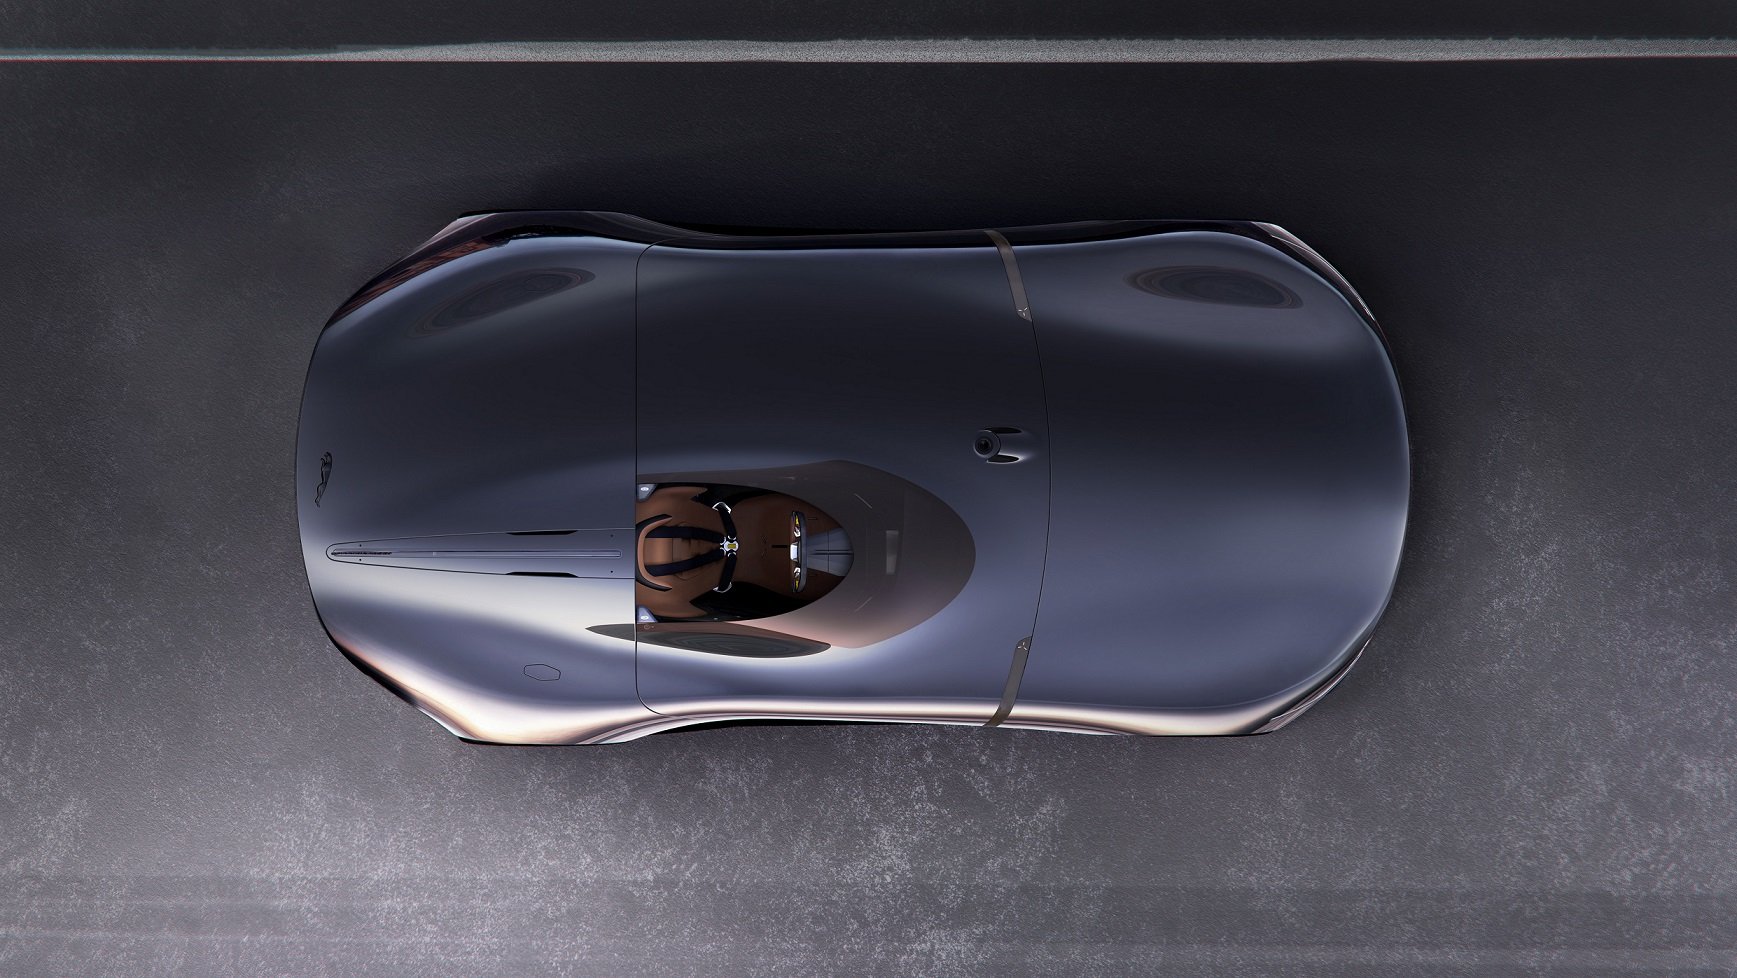 The Jaguar celebrates the third Vision Gran Turismo Car - The Roadster